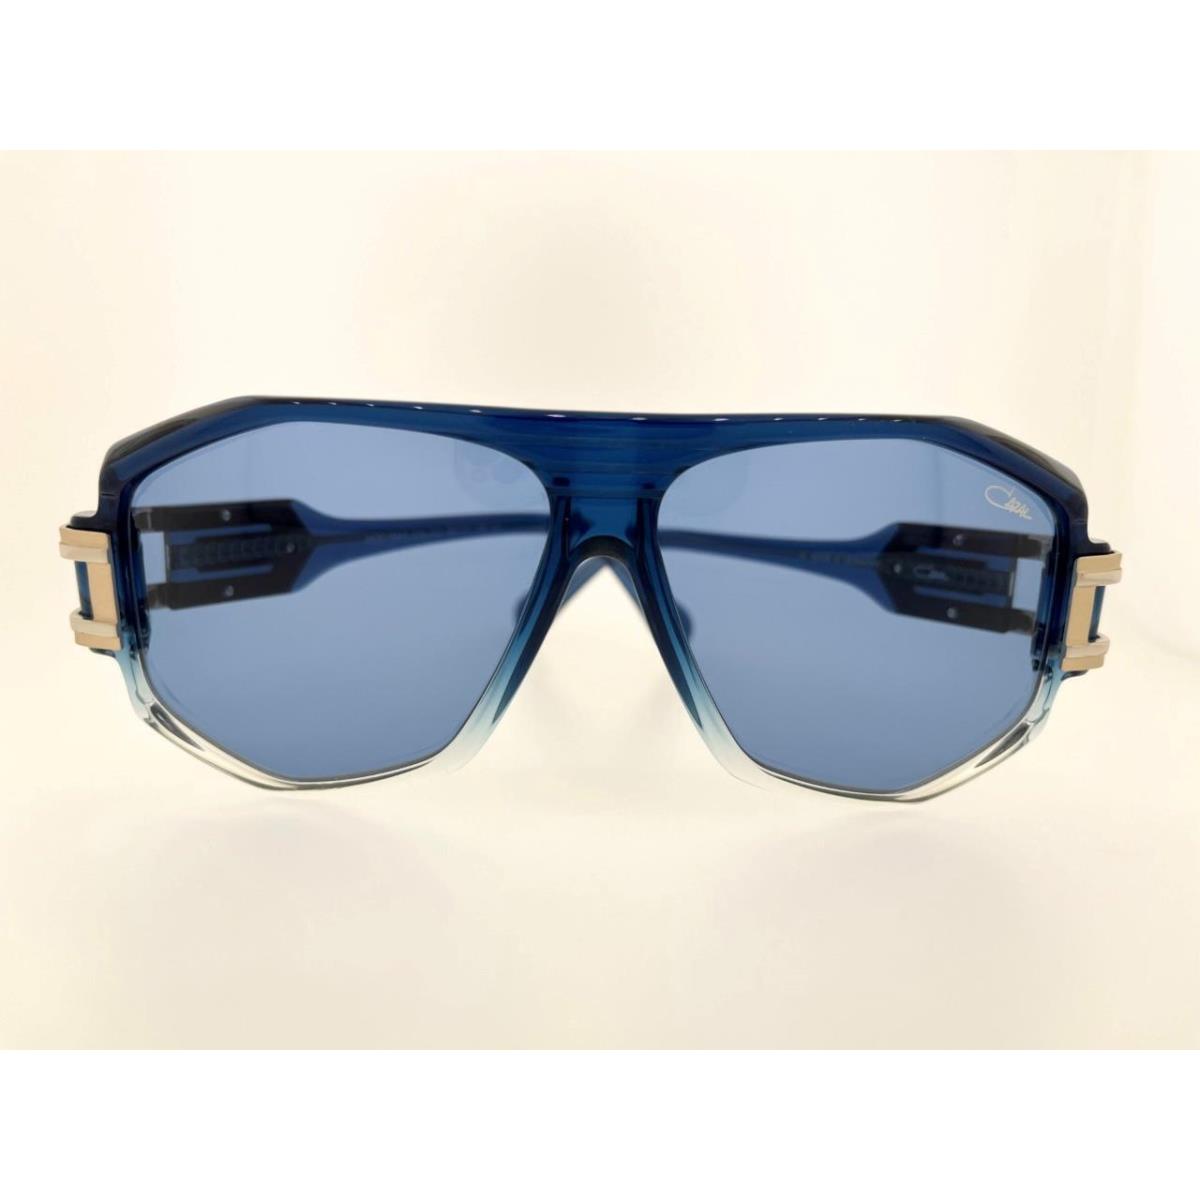 Cazal Sunglasses 163 010 59MM Blue Silver Frame with Blue Lenses